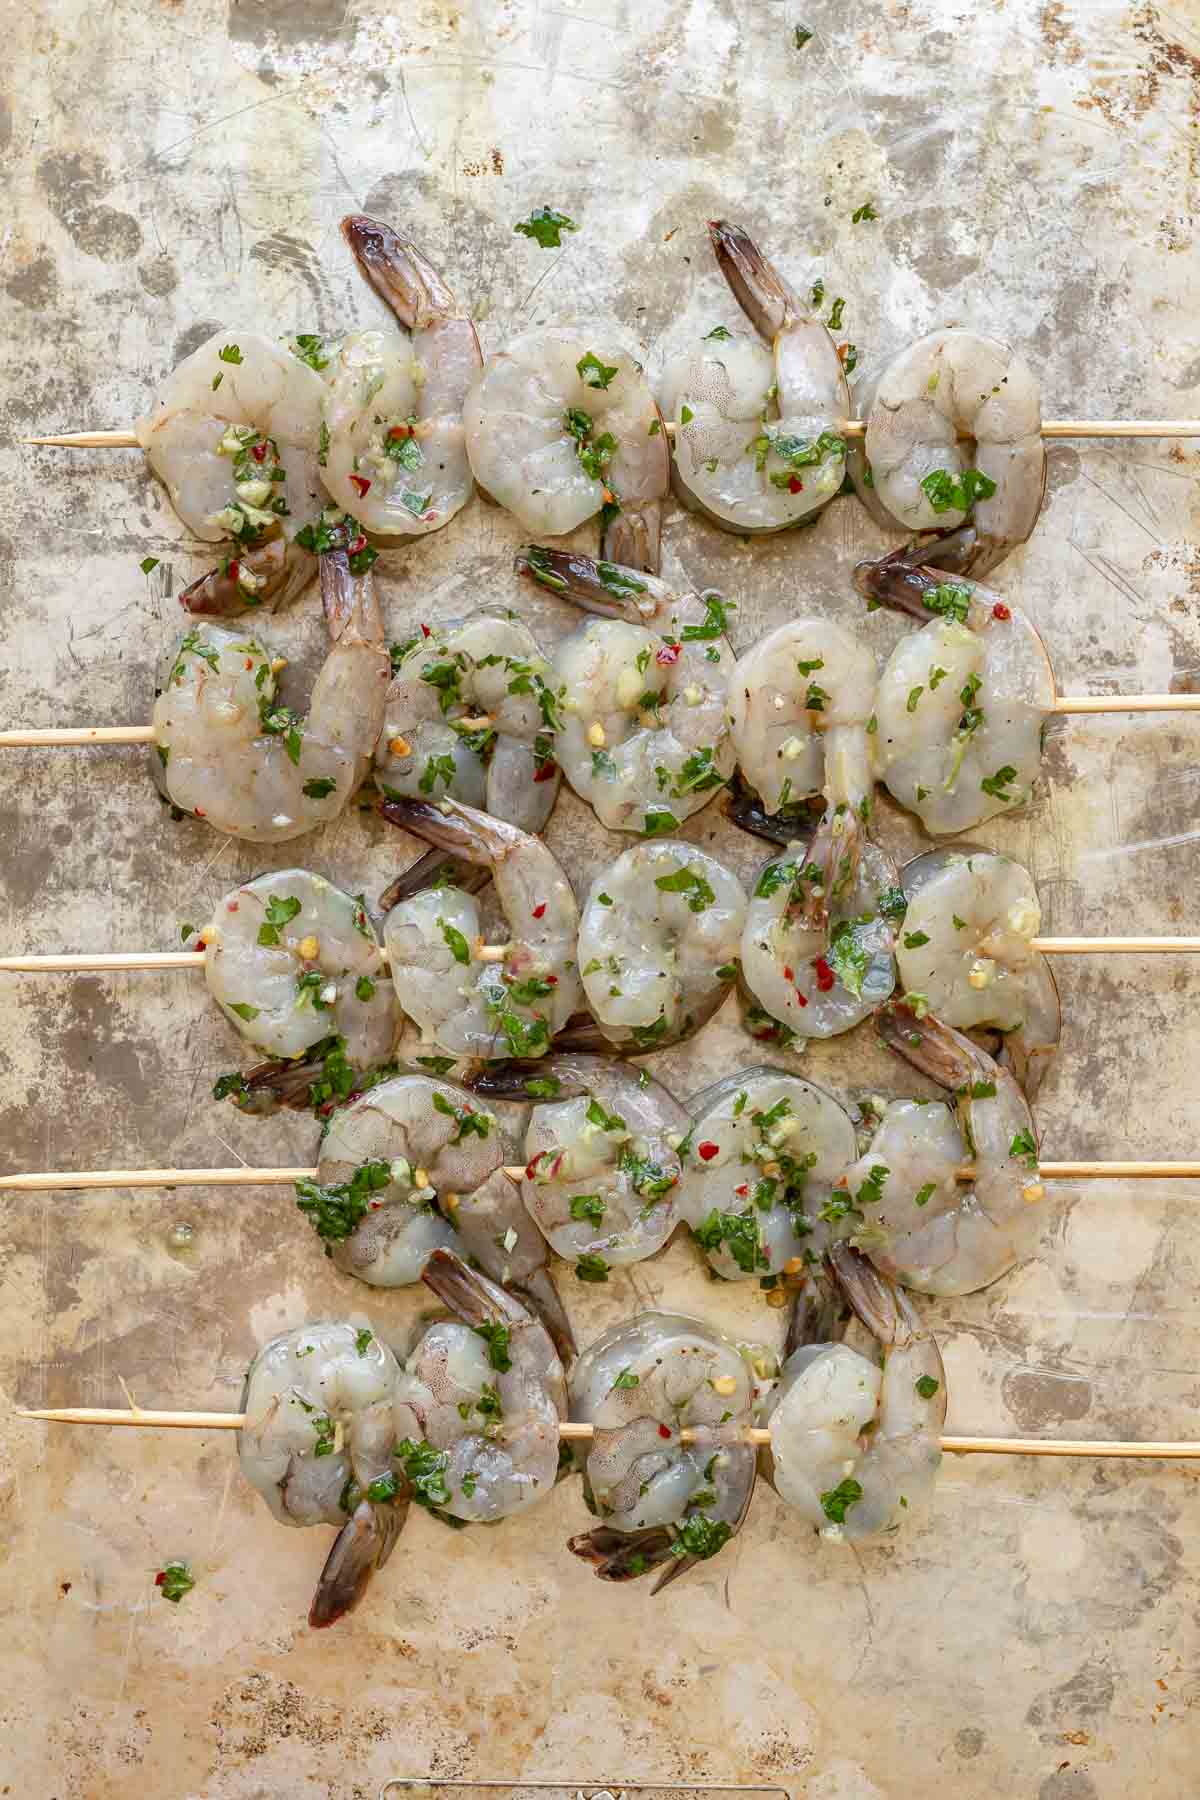 Marinated raw shrimp on skewers.